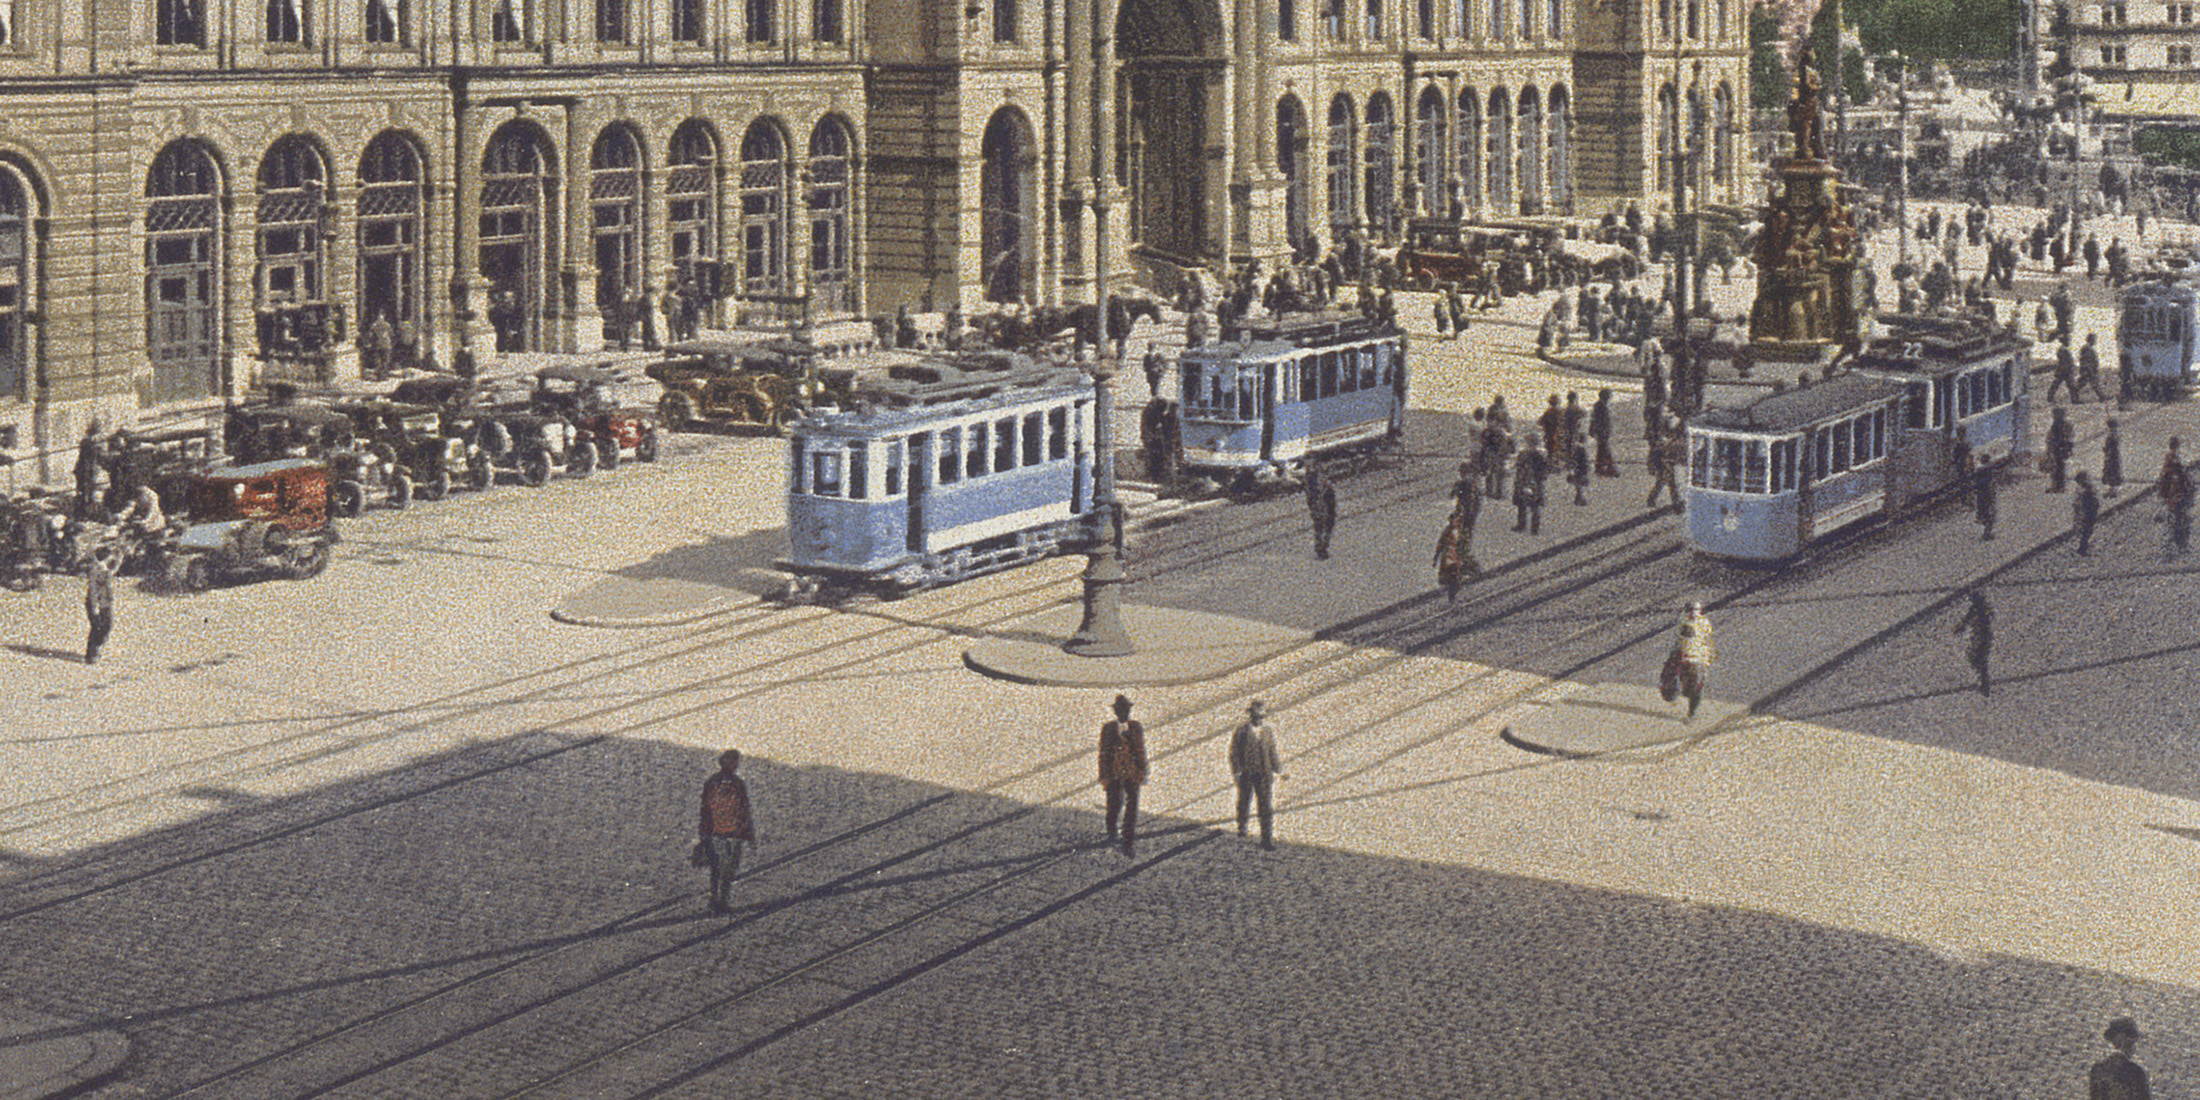 Local public transport in Zurich: key developments across three centuries